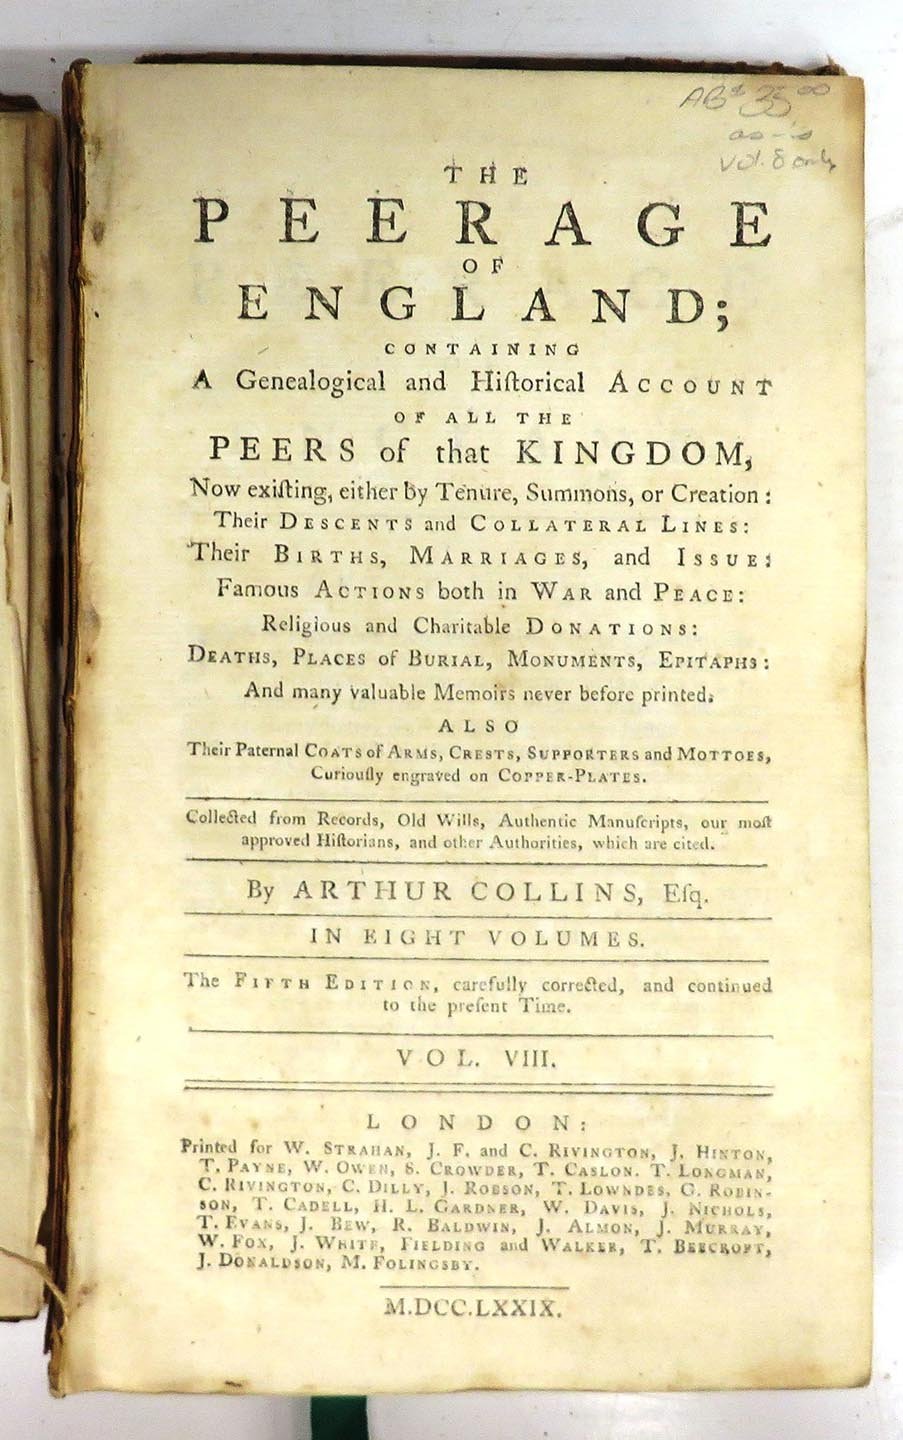 The Peerage of England Vol. VIII